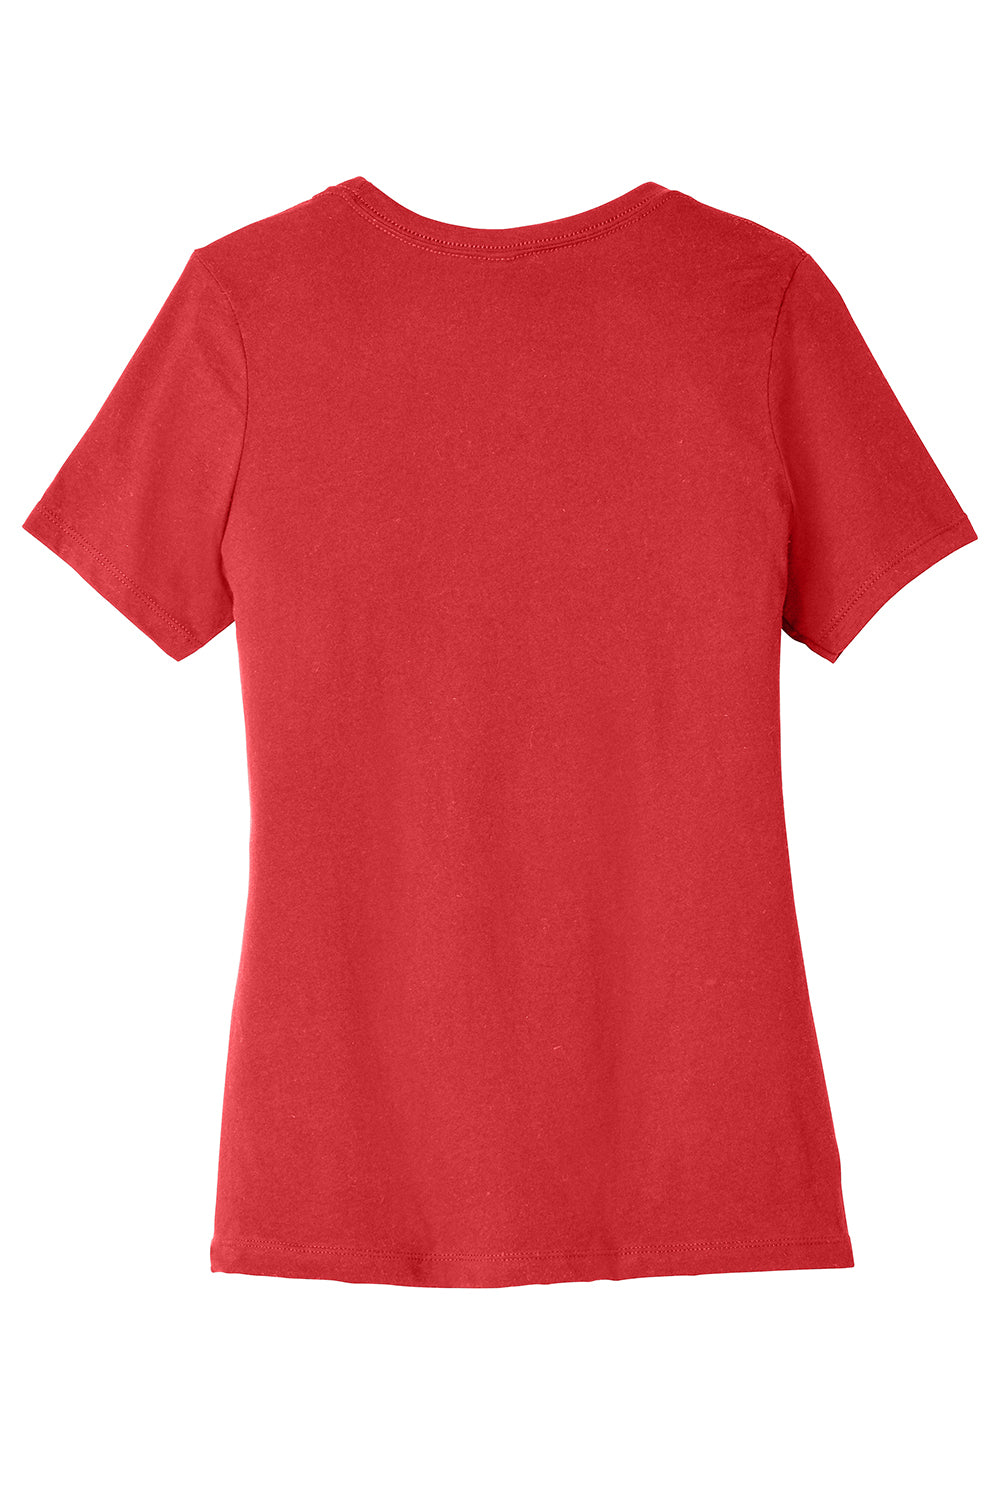 Bella + Canvas BC6413 Womens Short Sleeve Crewneck T-Shirt Red Flat Back